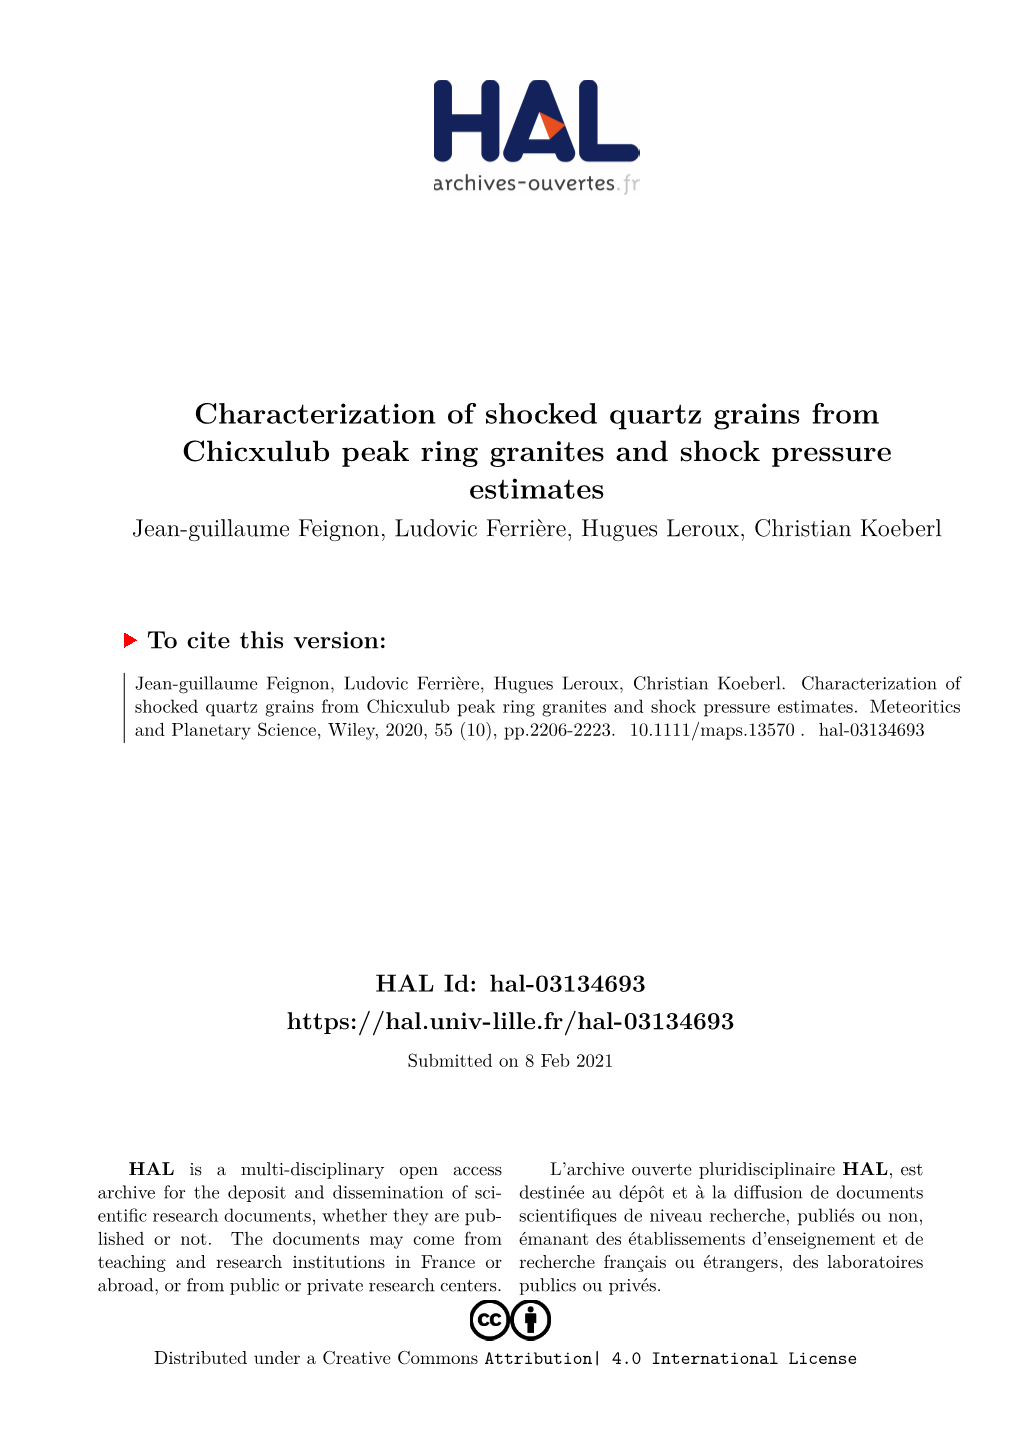 Characterization of Shocked Quartz Grains from Chicxulub Peak Ring Granites and Shock Pressure Estimates